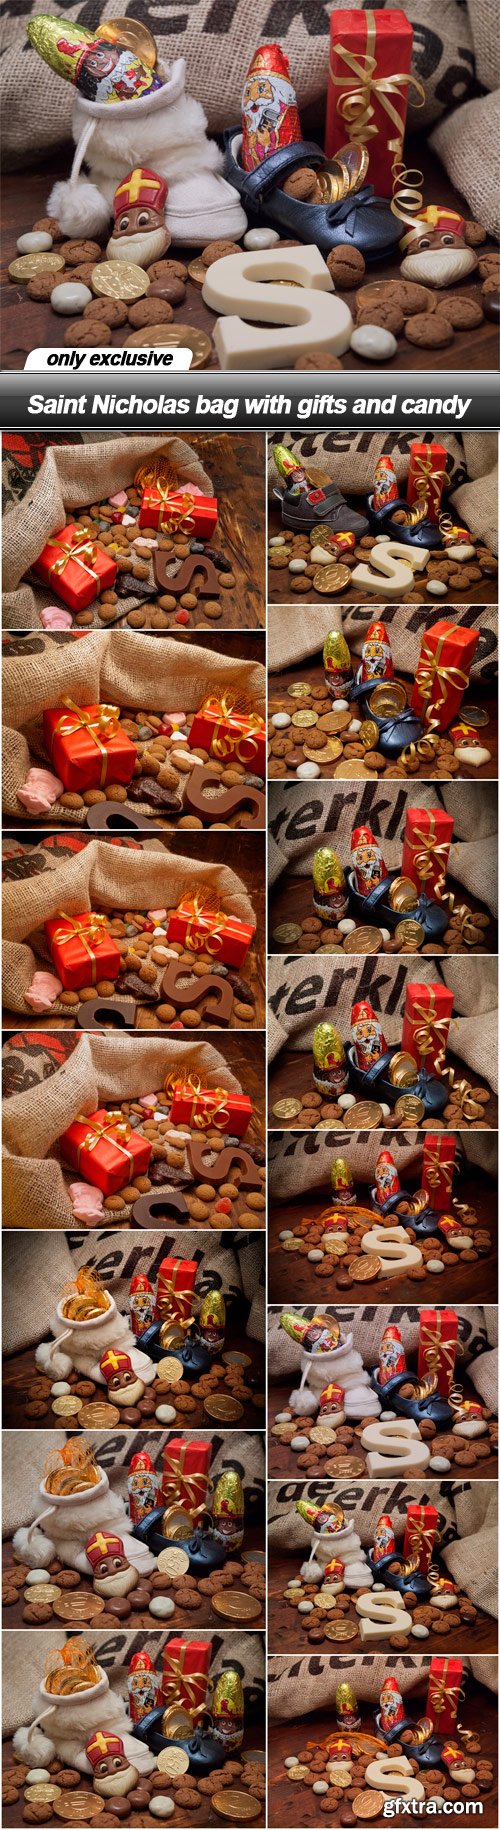 Saint Nicholas bag with gifts and candy - 15 UHQ JPEG